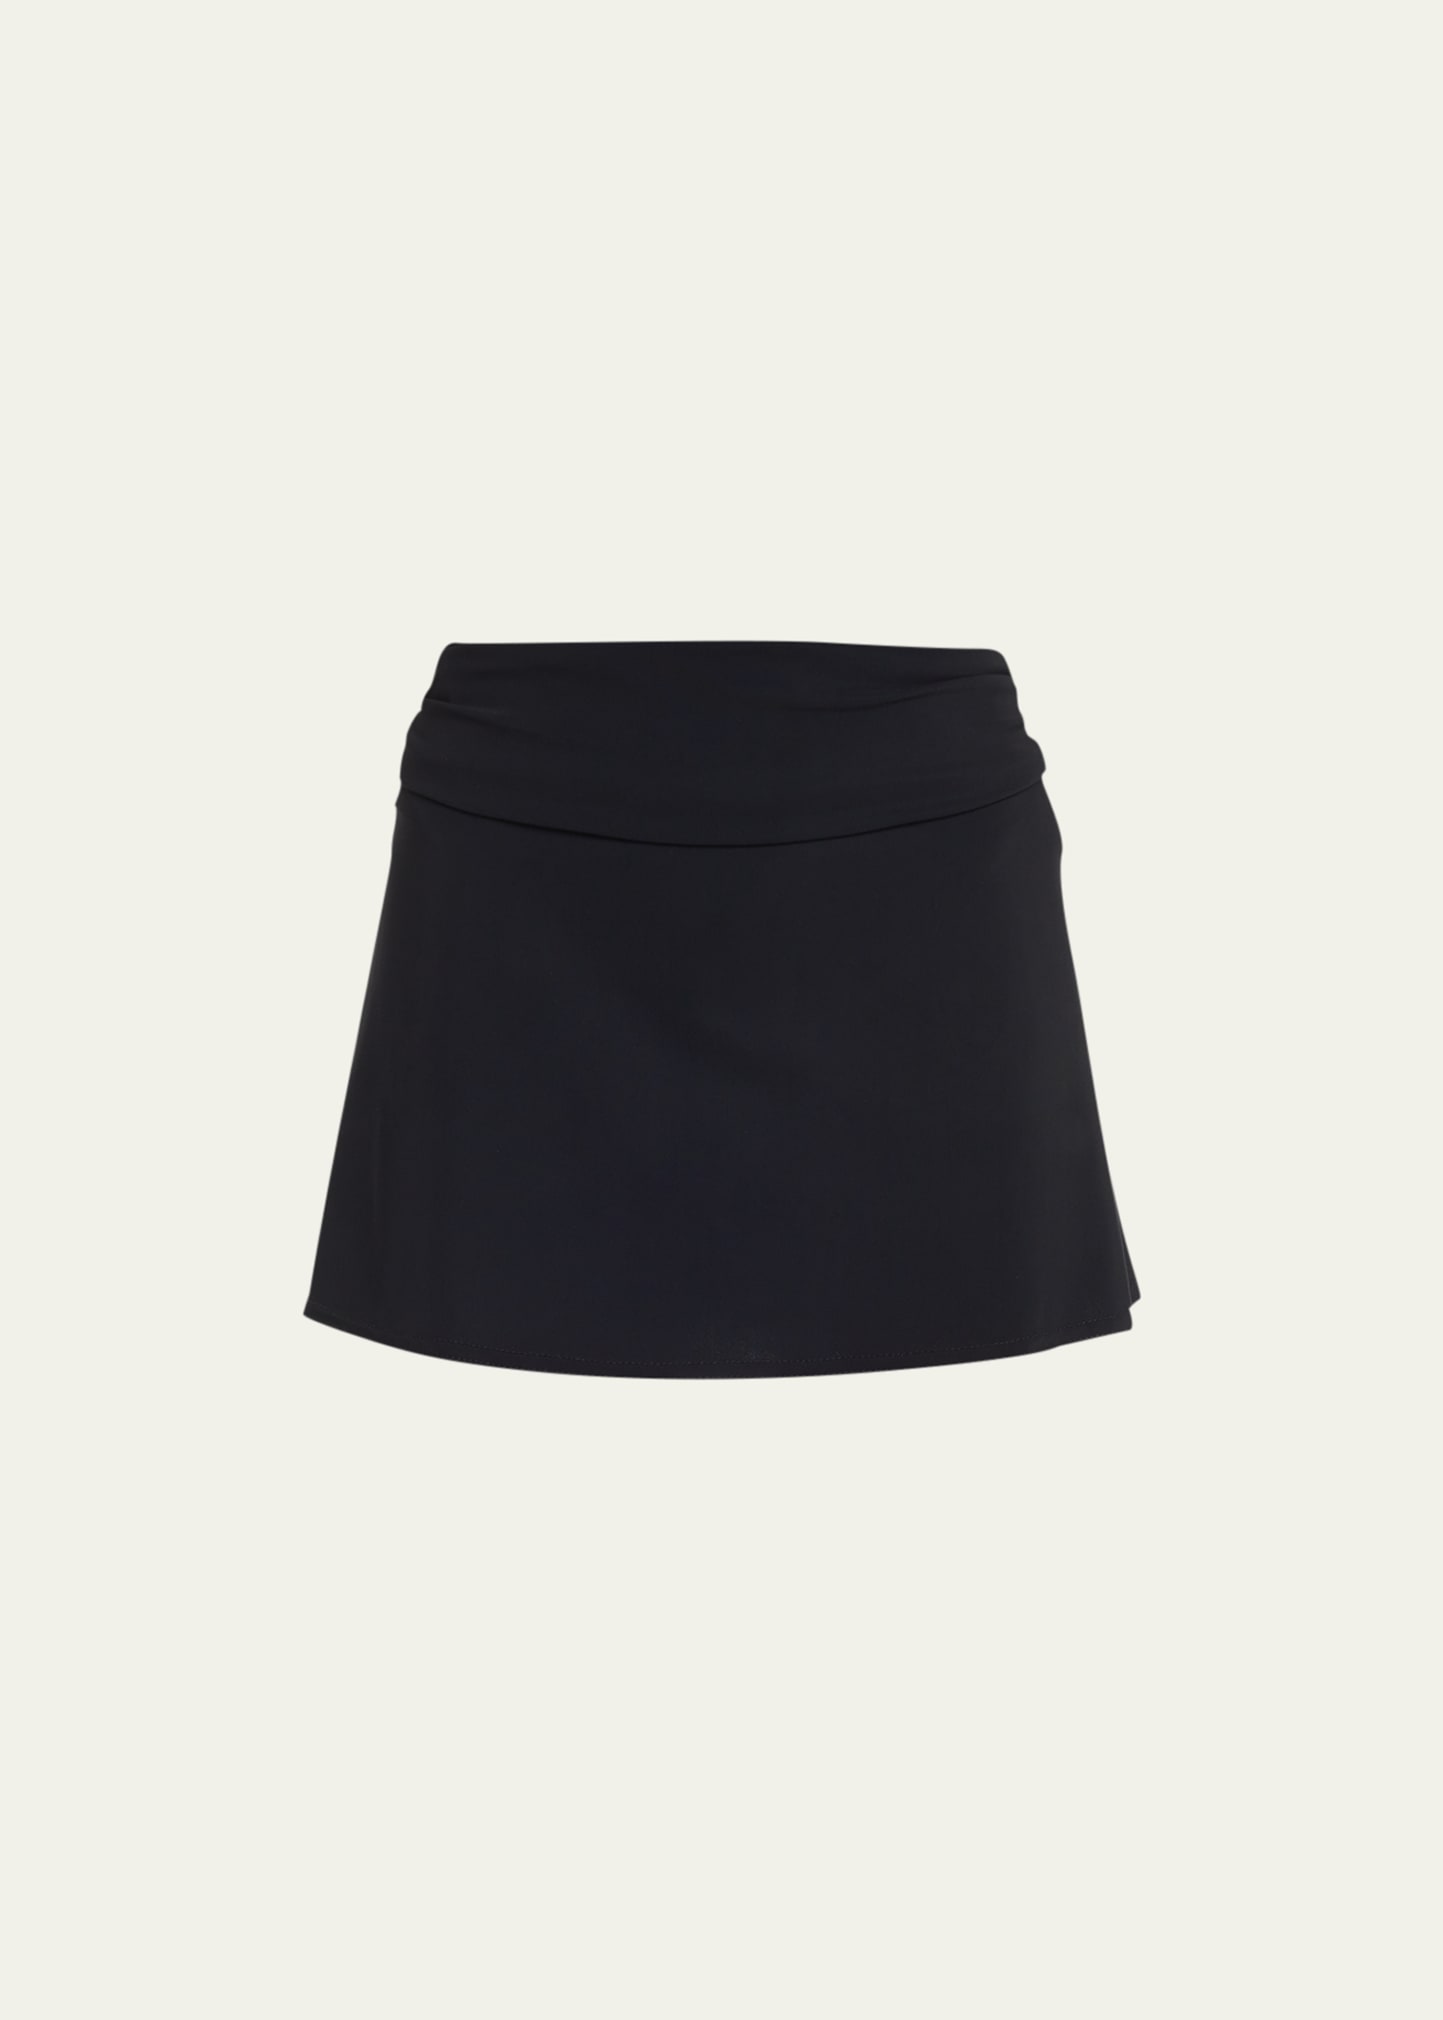 Karla Colletto Banded Multi-purpose Mini Skirt In Navy